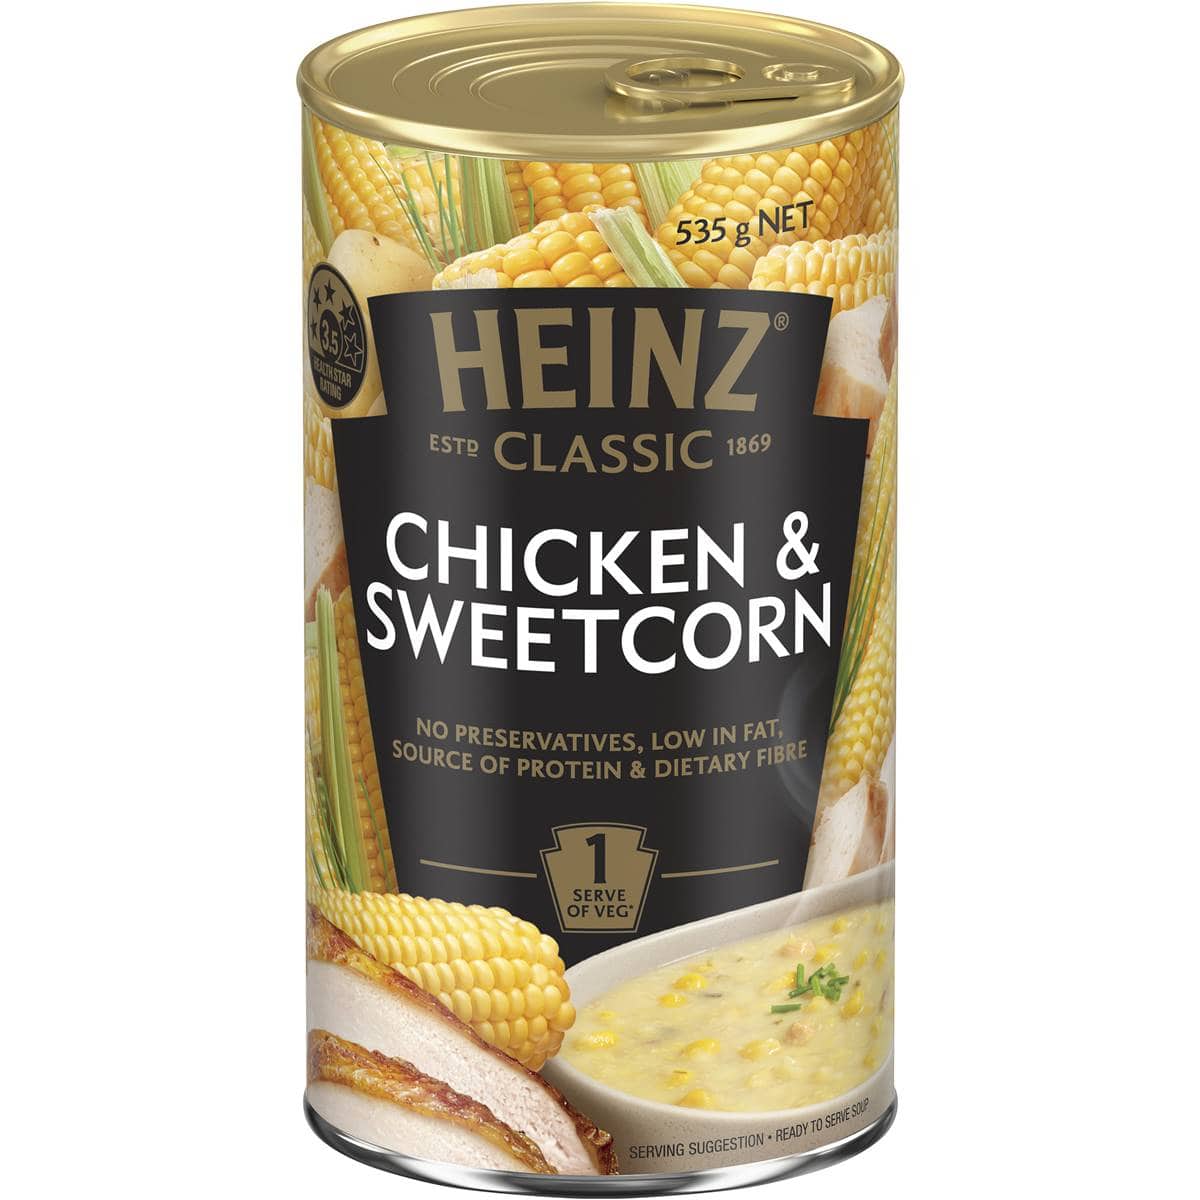 Heinz Soup Classic Chicken & Sweetcorn 535g